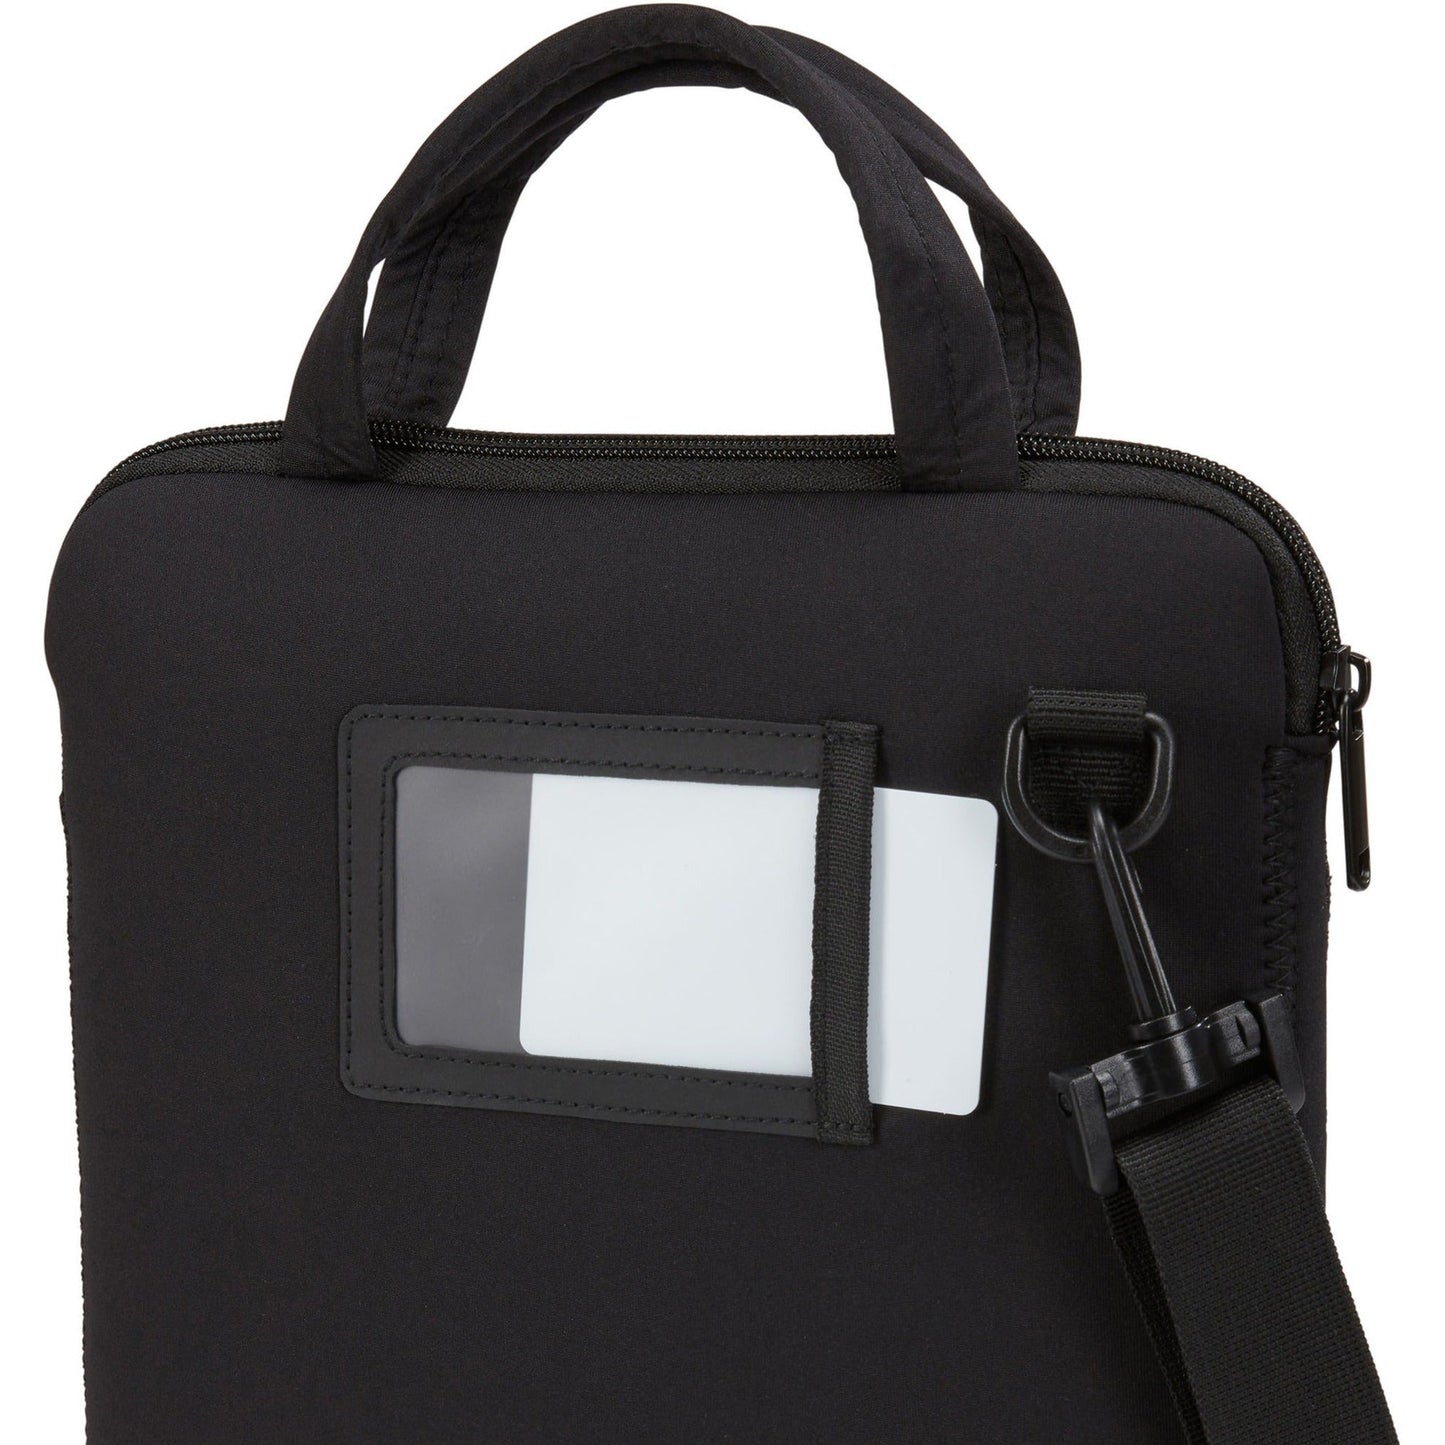 Case Logic Quantic LNEO-212 Carrying Case (Sleeve) for 12" Chromebook - Black